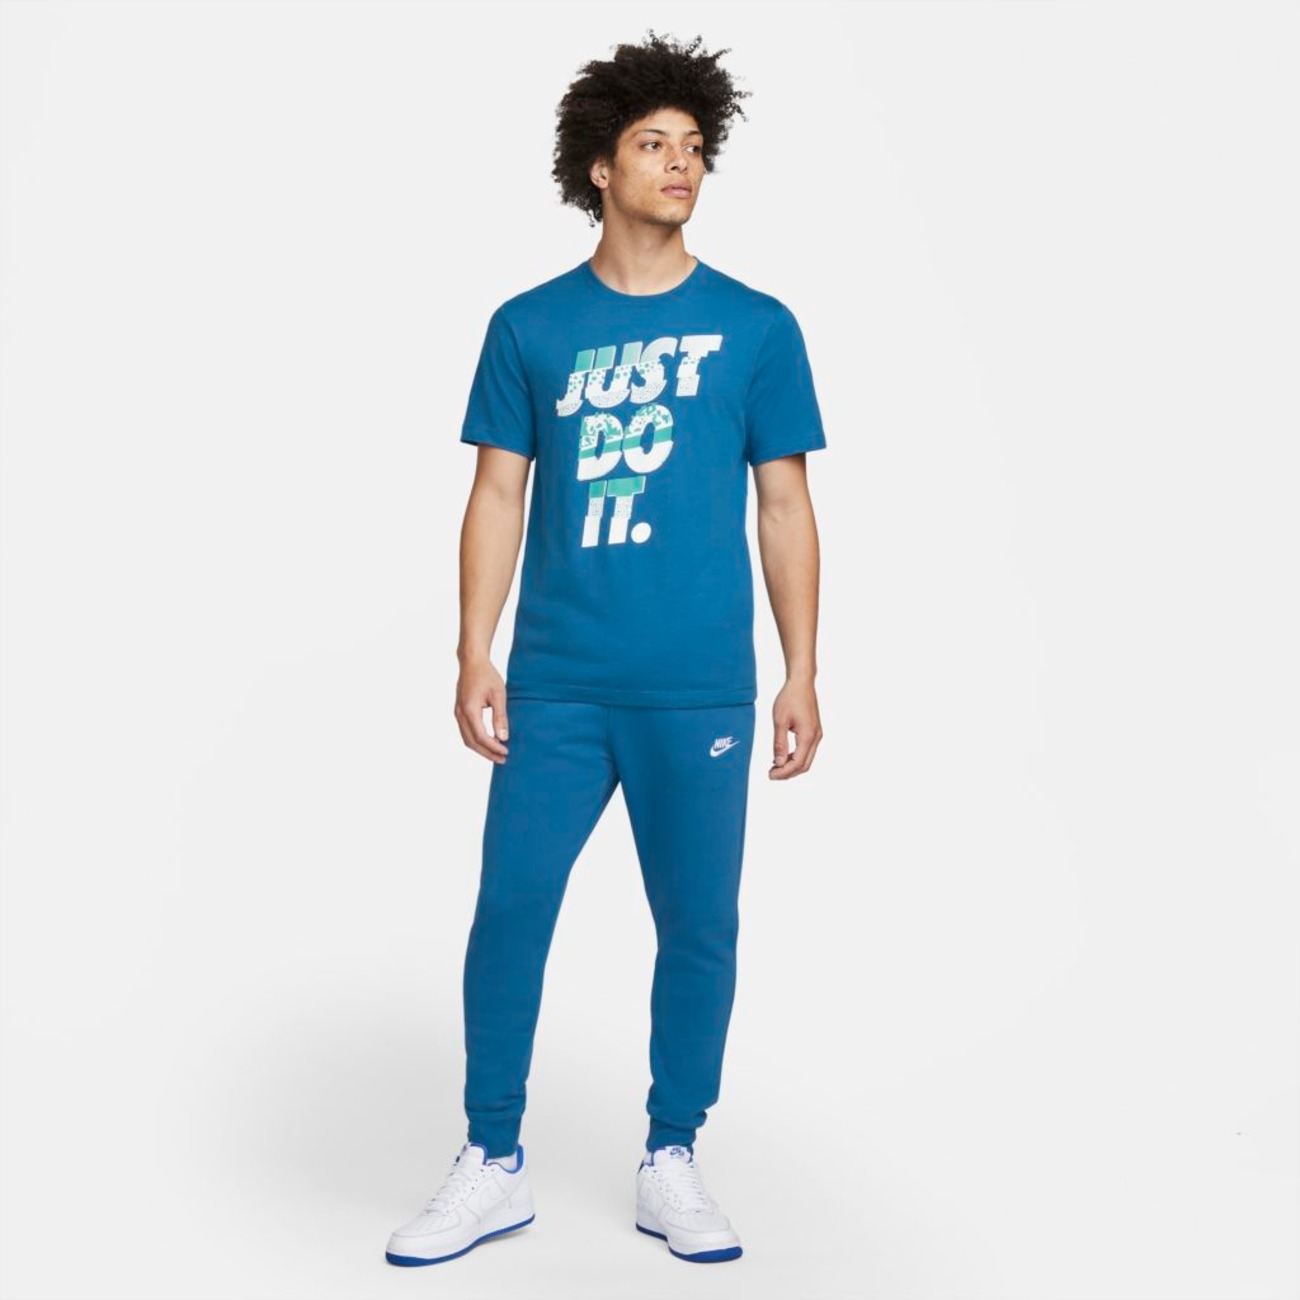 Camiseta Nike Sportswear "Just do It" Masculina - Foto 4